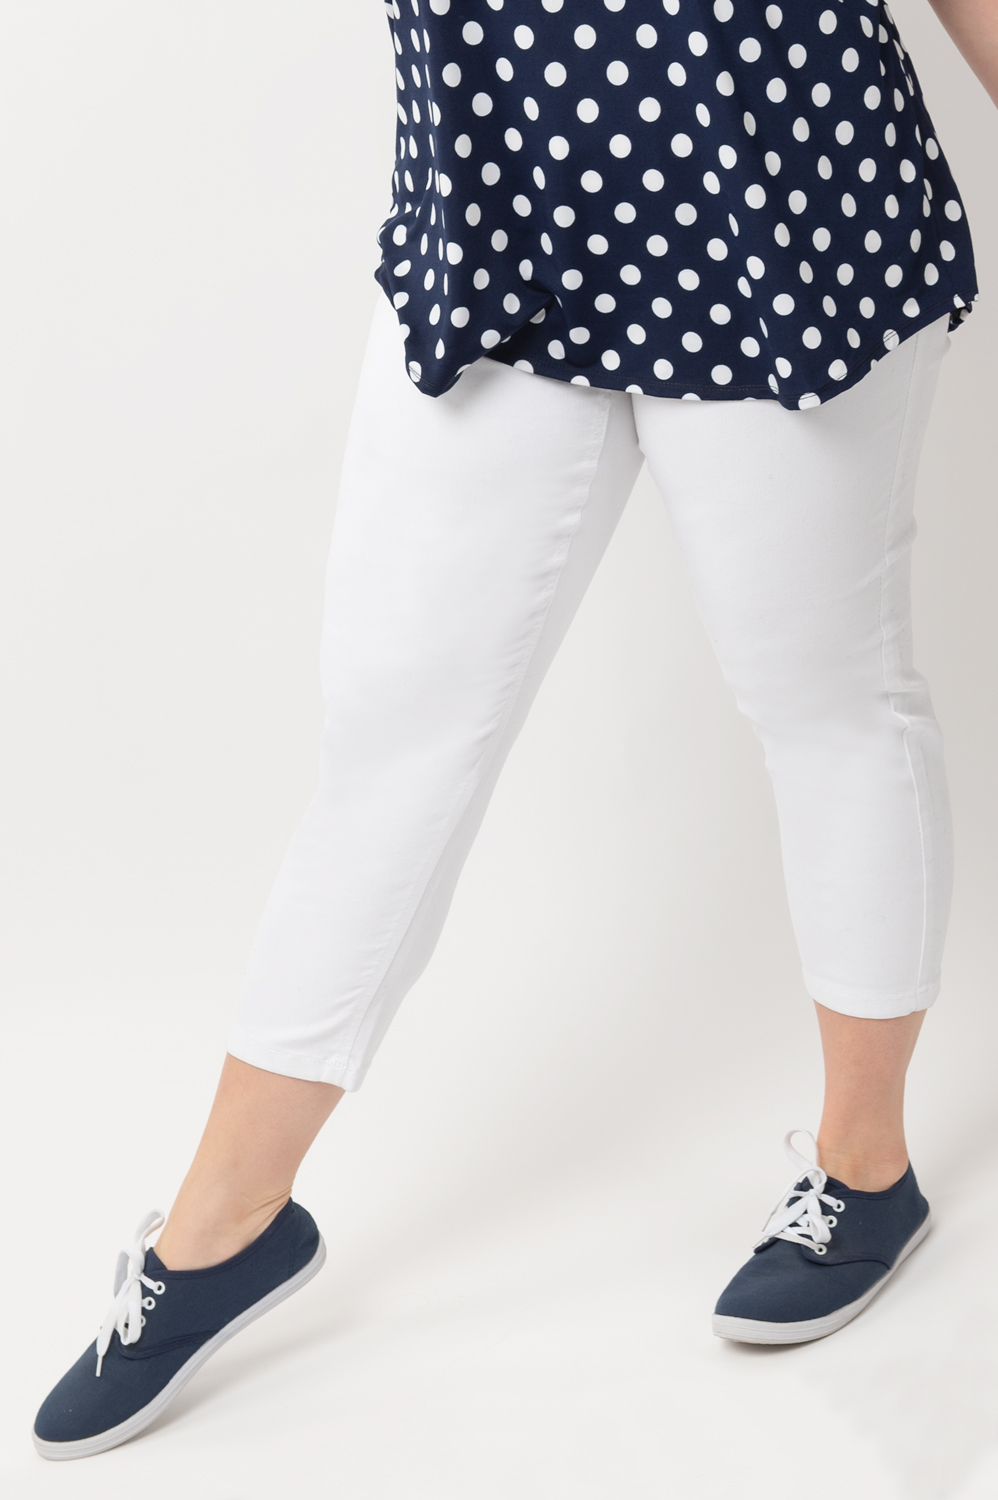 Suko Jeans Capris Women's Size 6